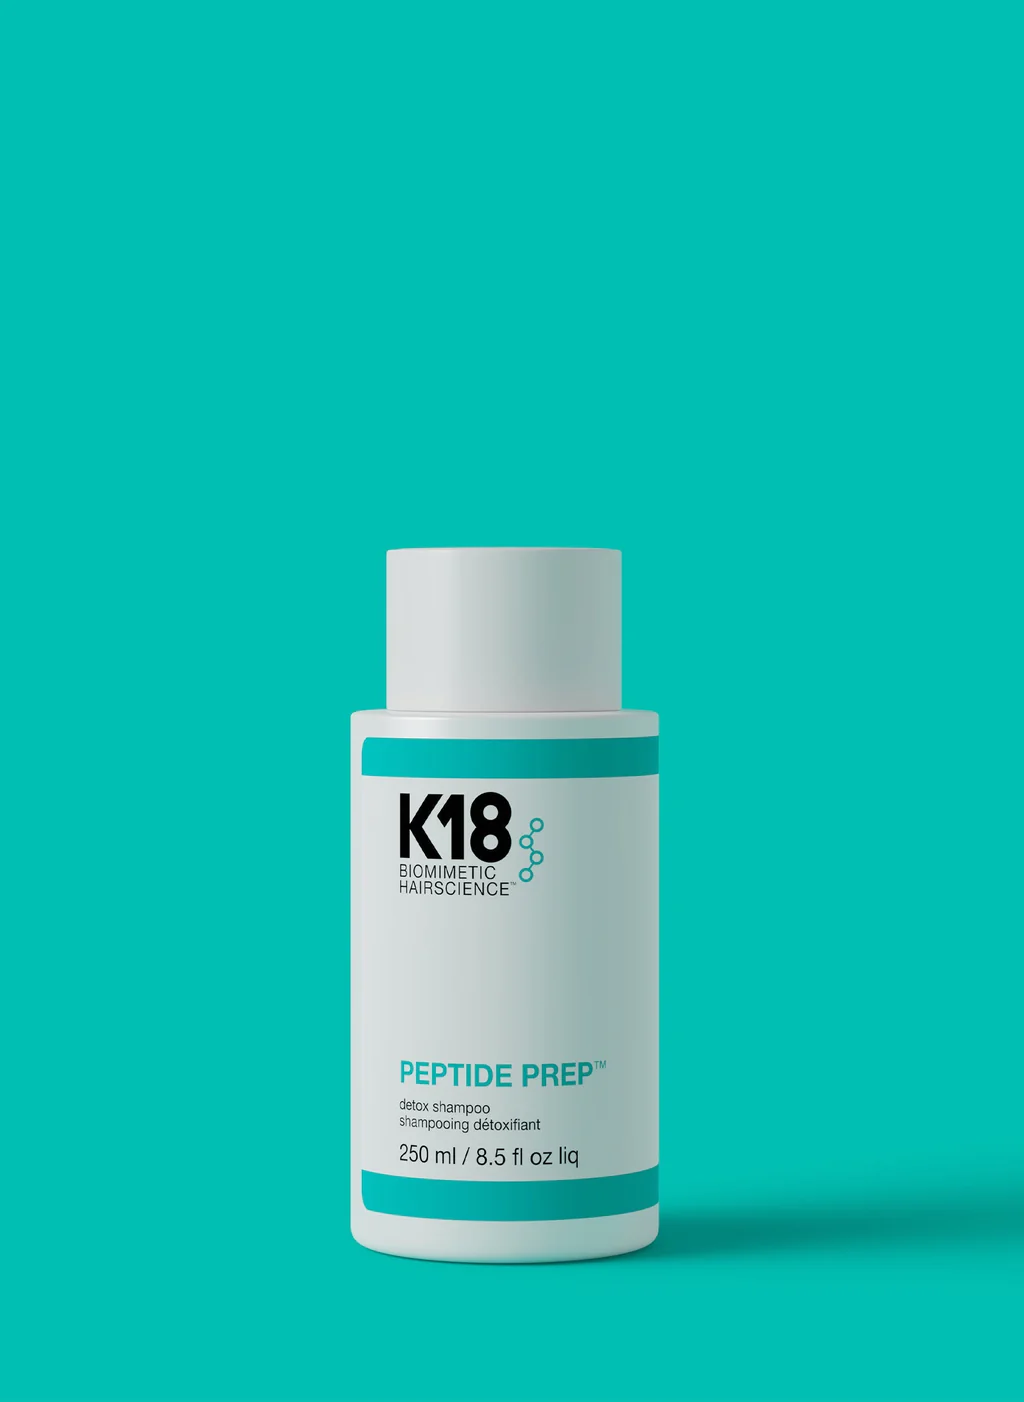 K18 | PEPTIDE PREP™ Detox Shampoo